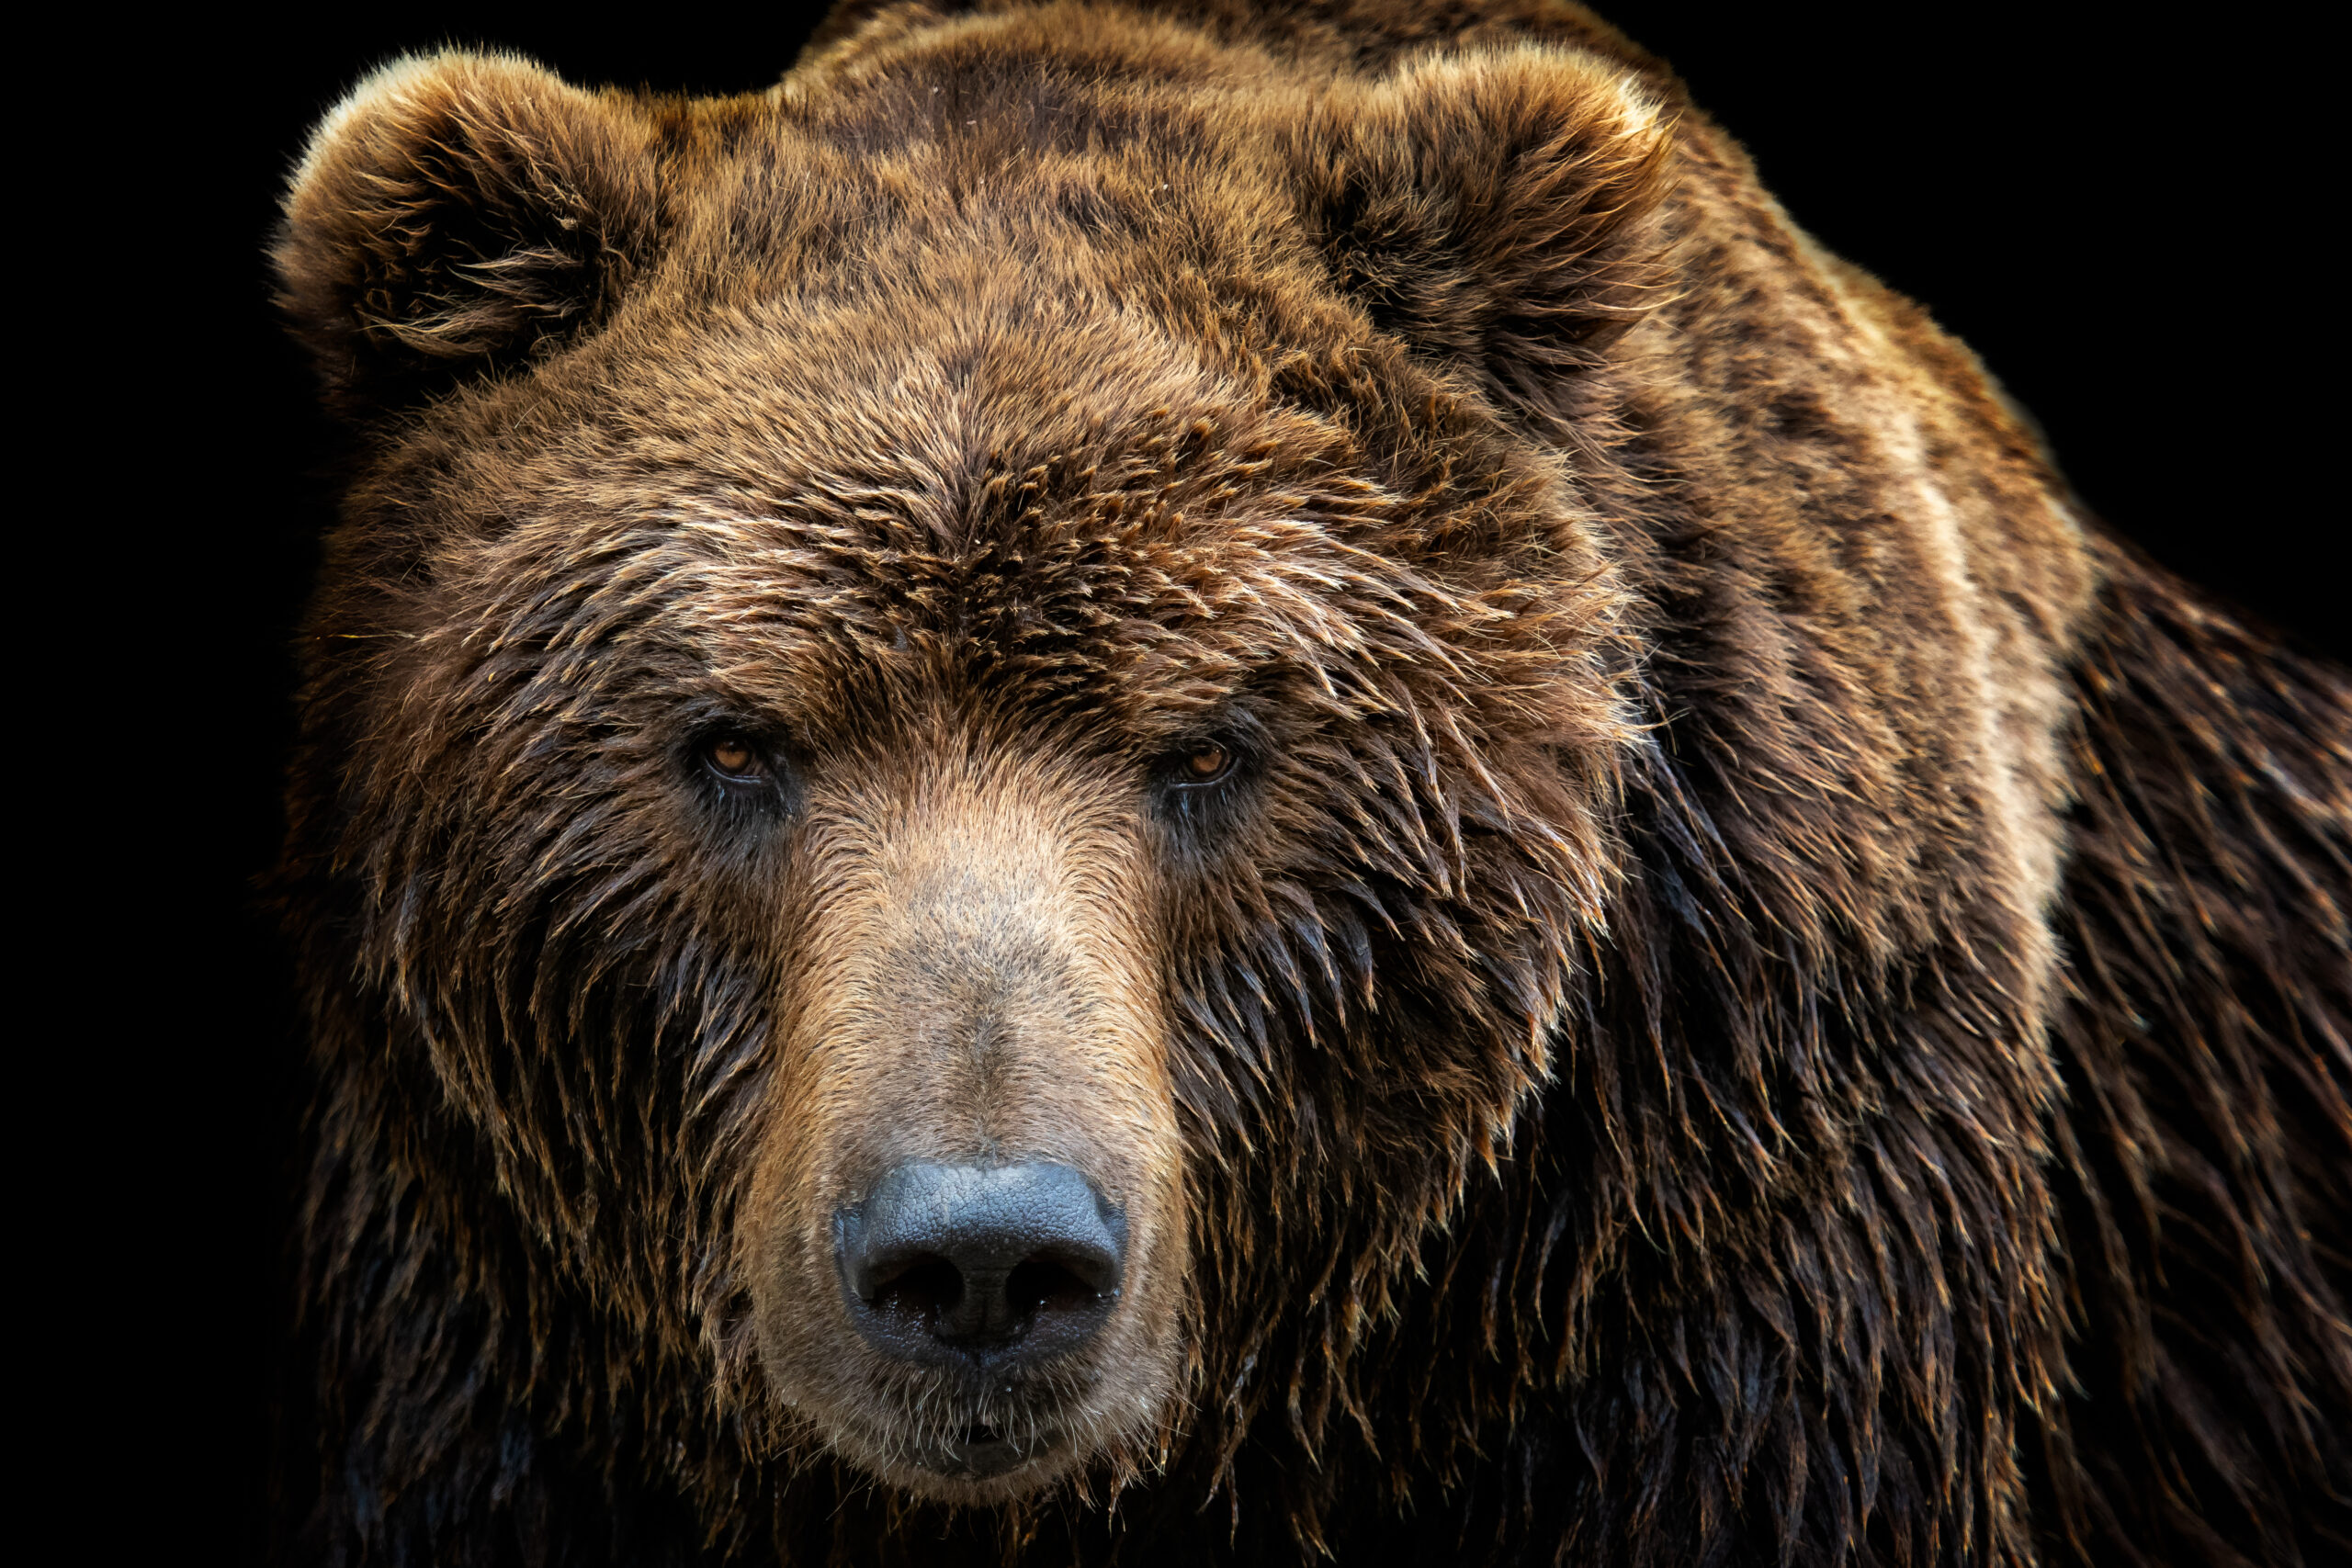 bear closeup scaled 1 Bitcoin sinks again ahead of this week’s FOMC meeting